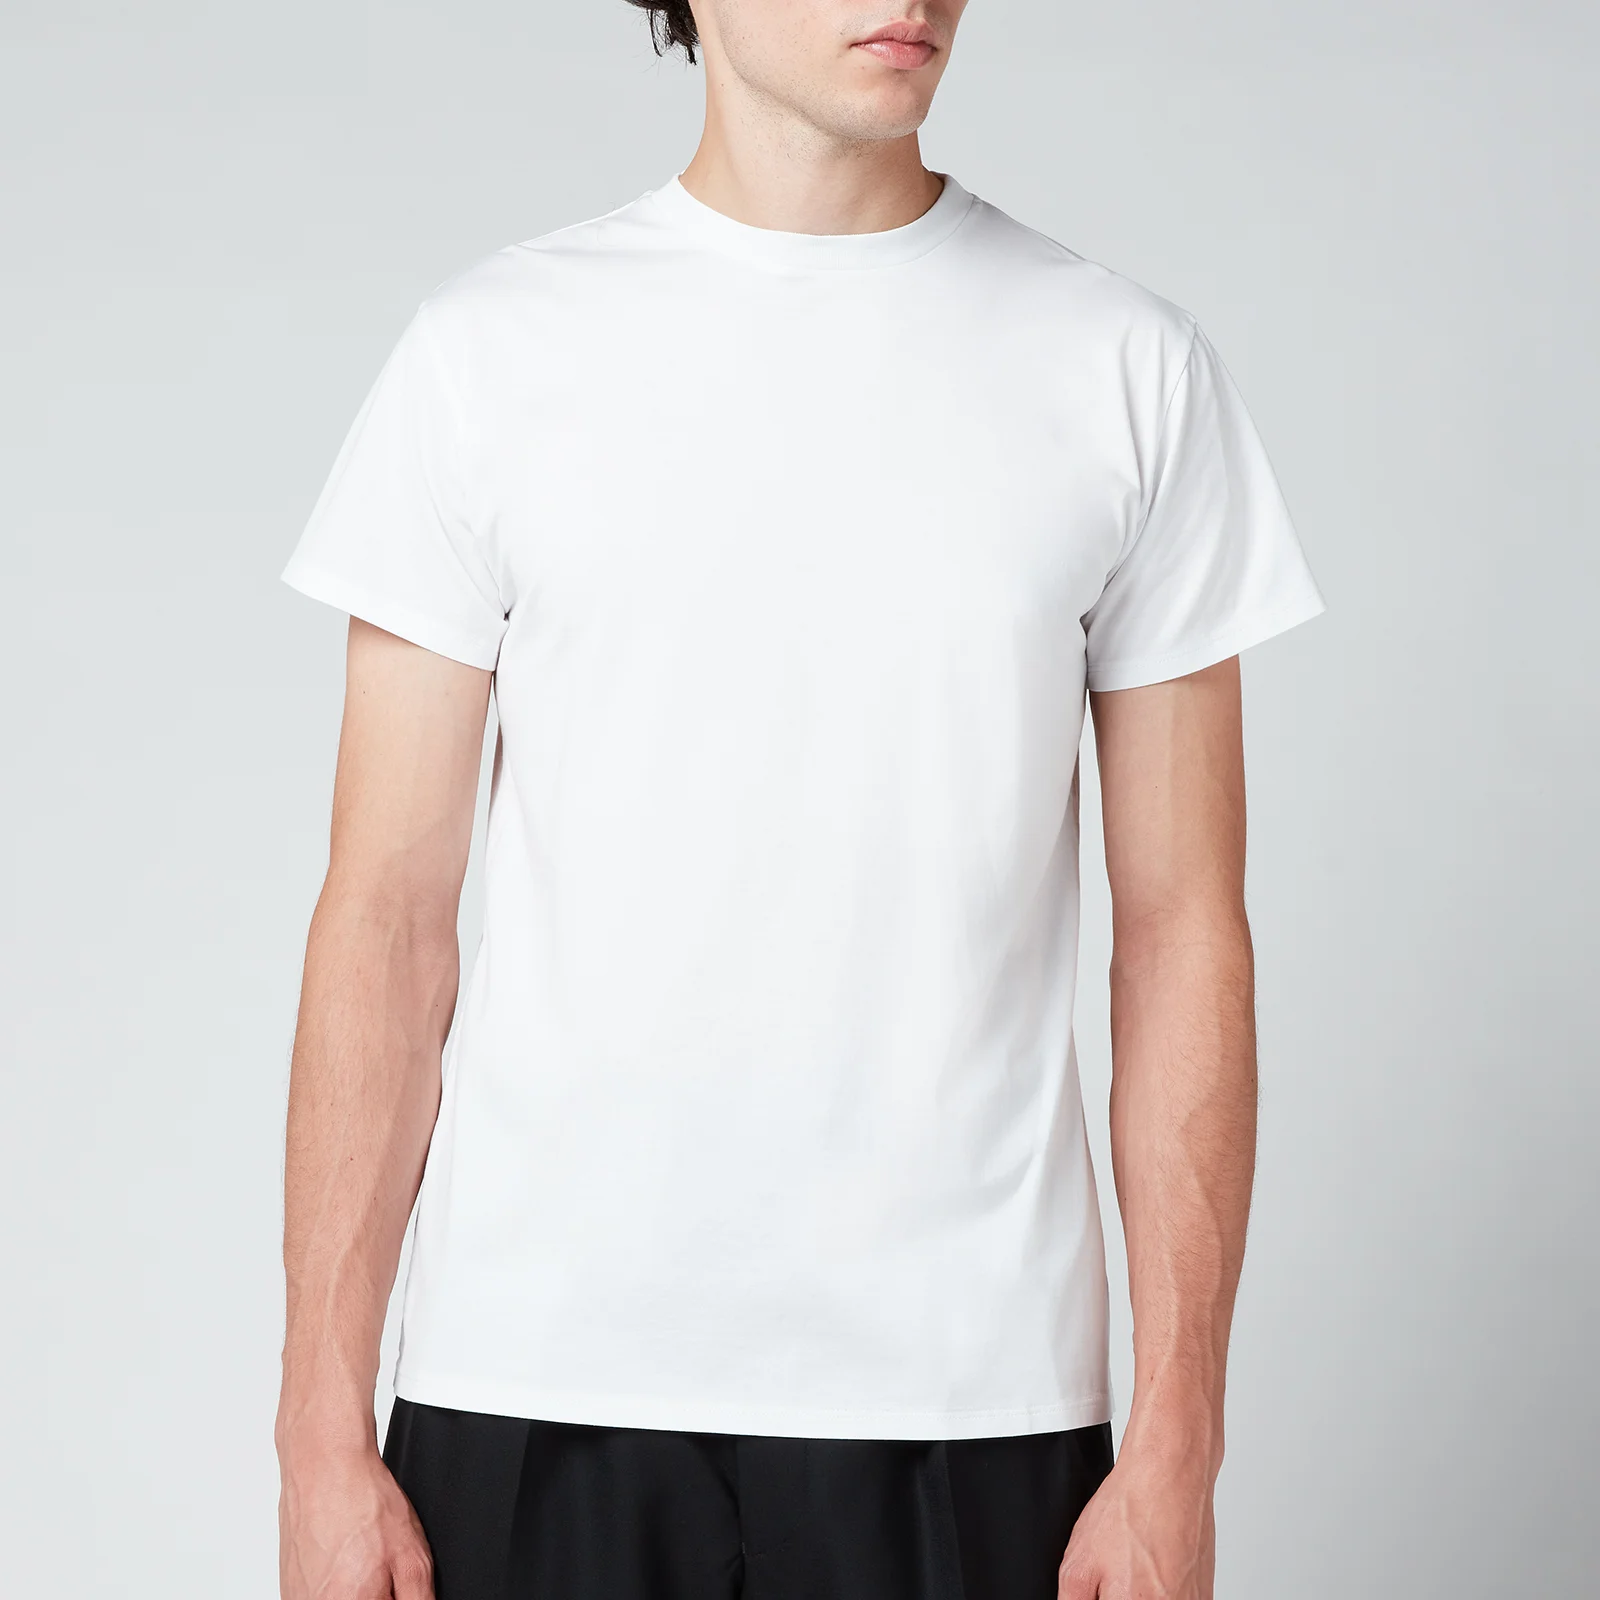 Maison Margiela Men's Classic Jersey T-Shirt - White Image 1